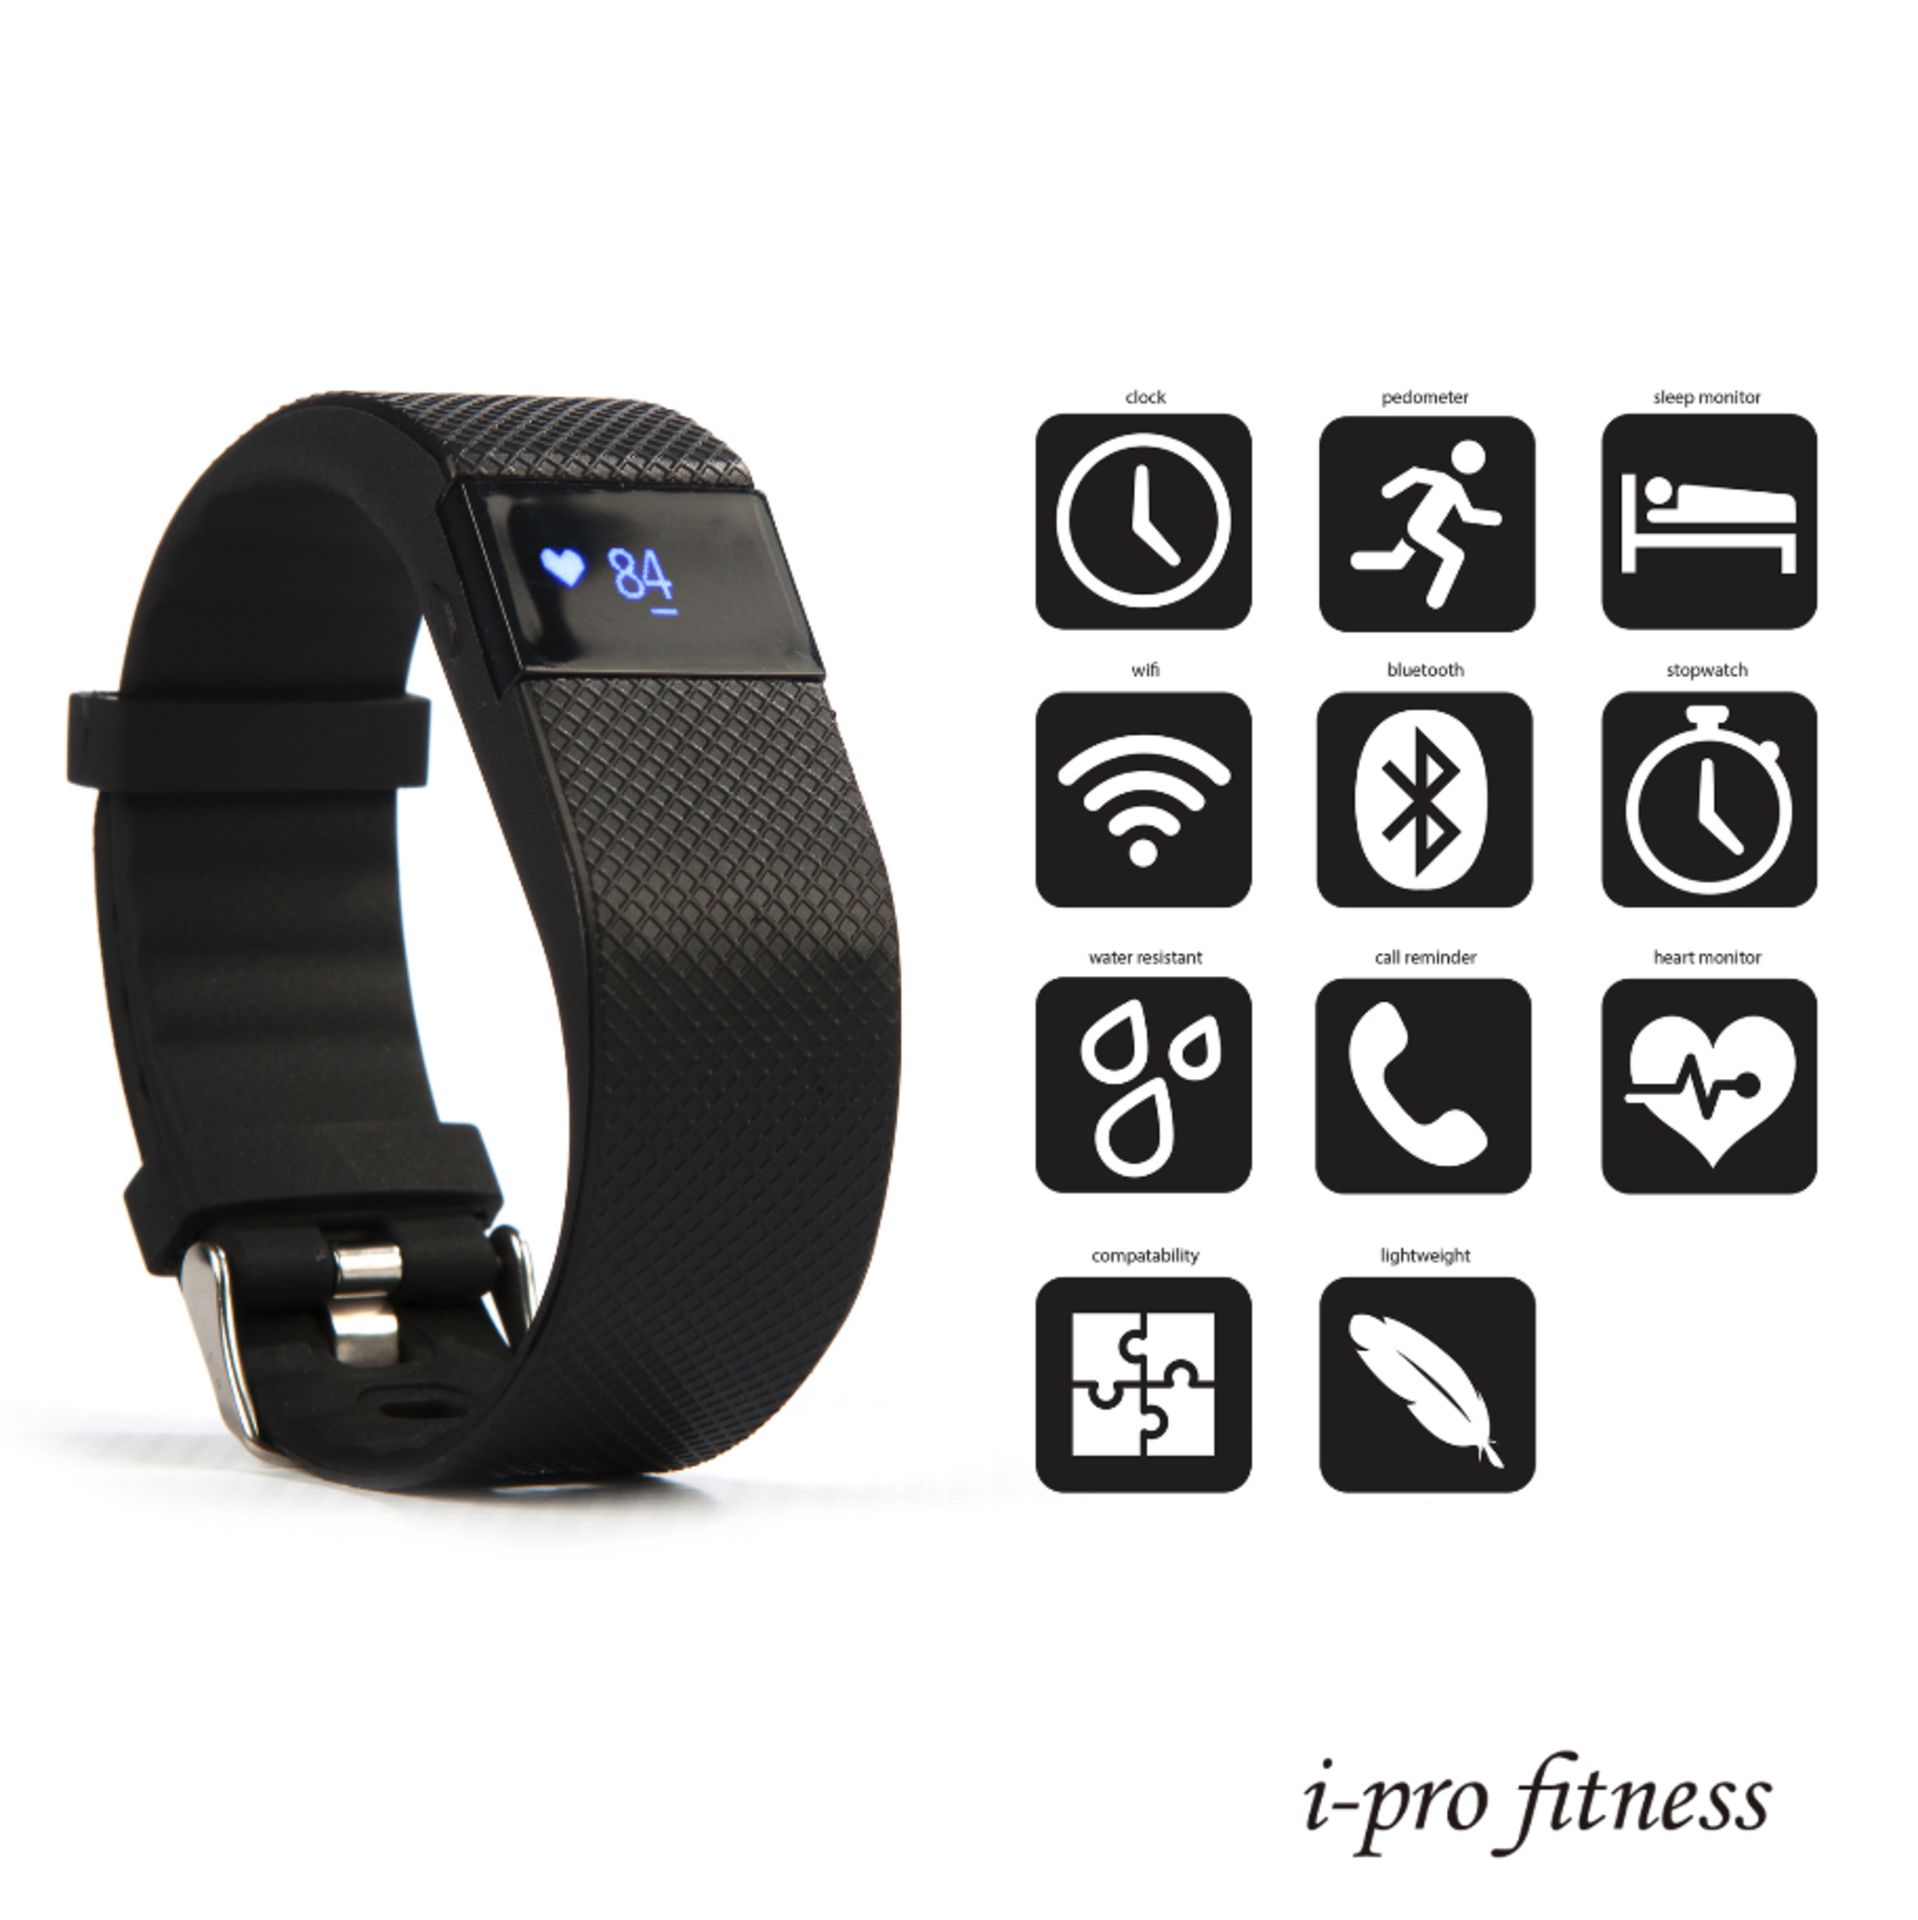 ***Trade lot 50 x Units Fitness Tracker i-pro fitness, Bluetooth 4.0 Sports Smart Bracelet*** - Image 6 of 8